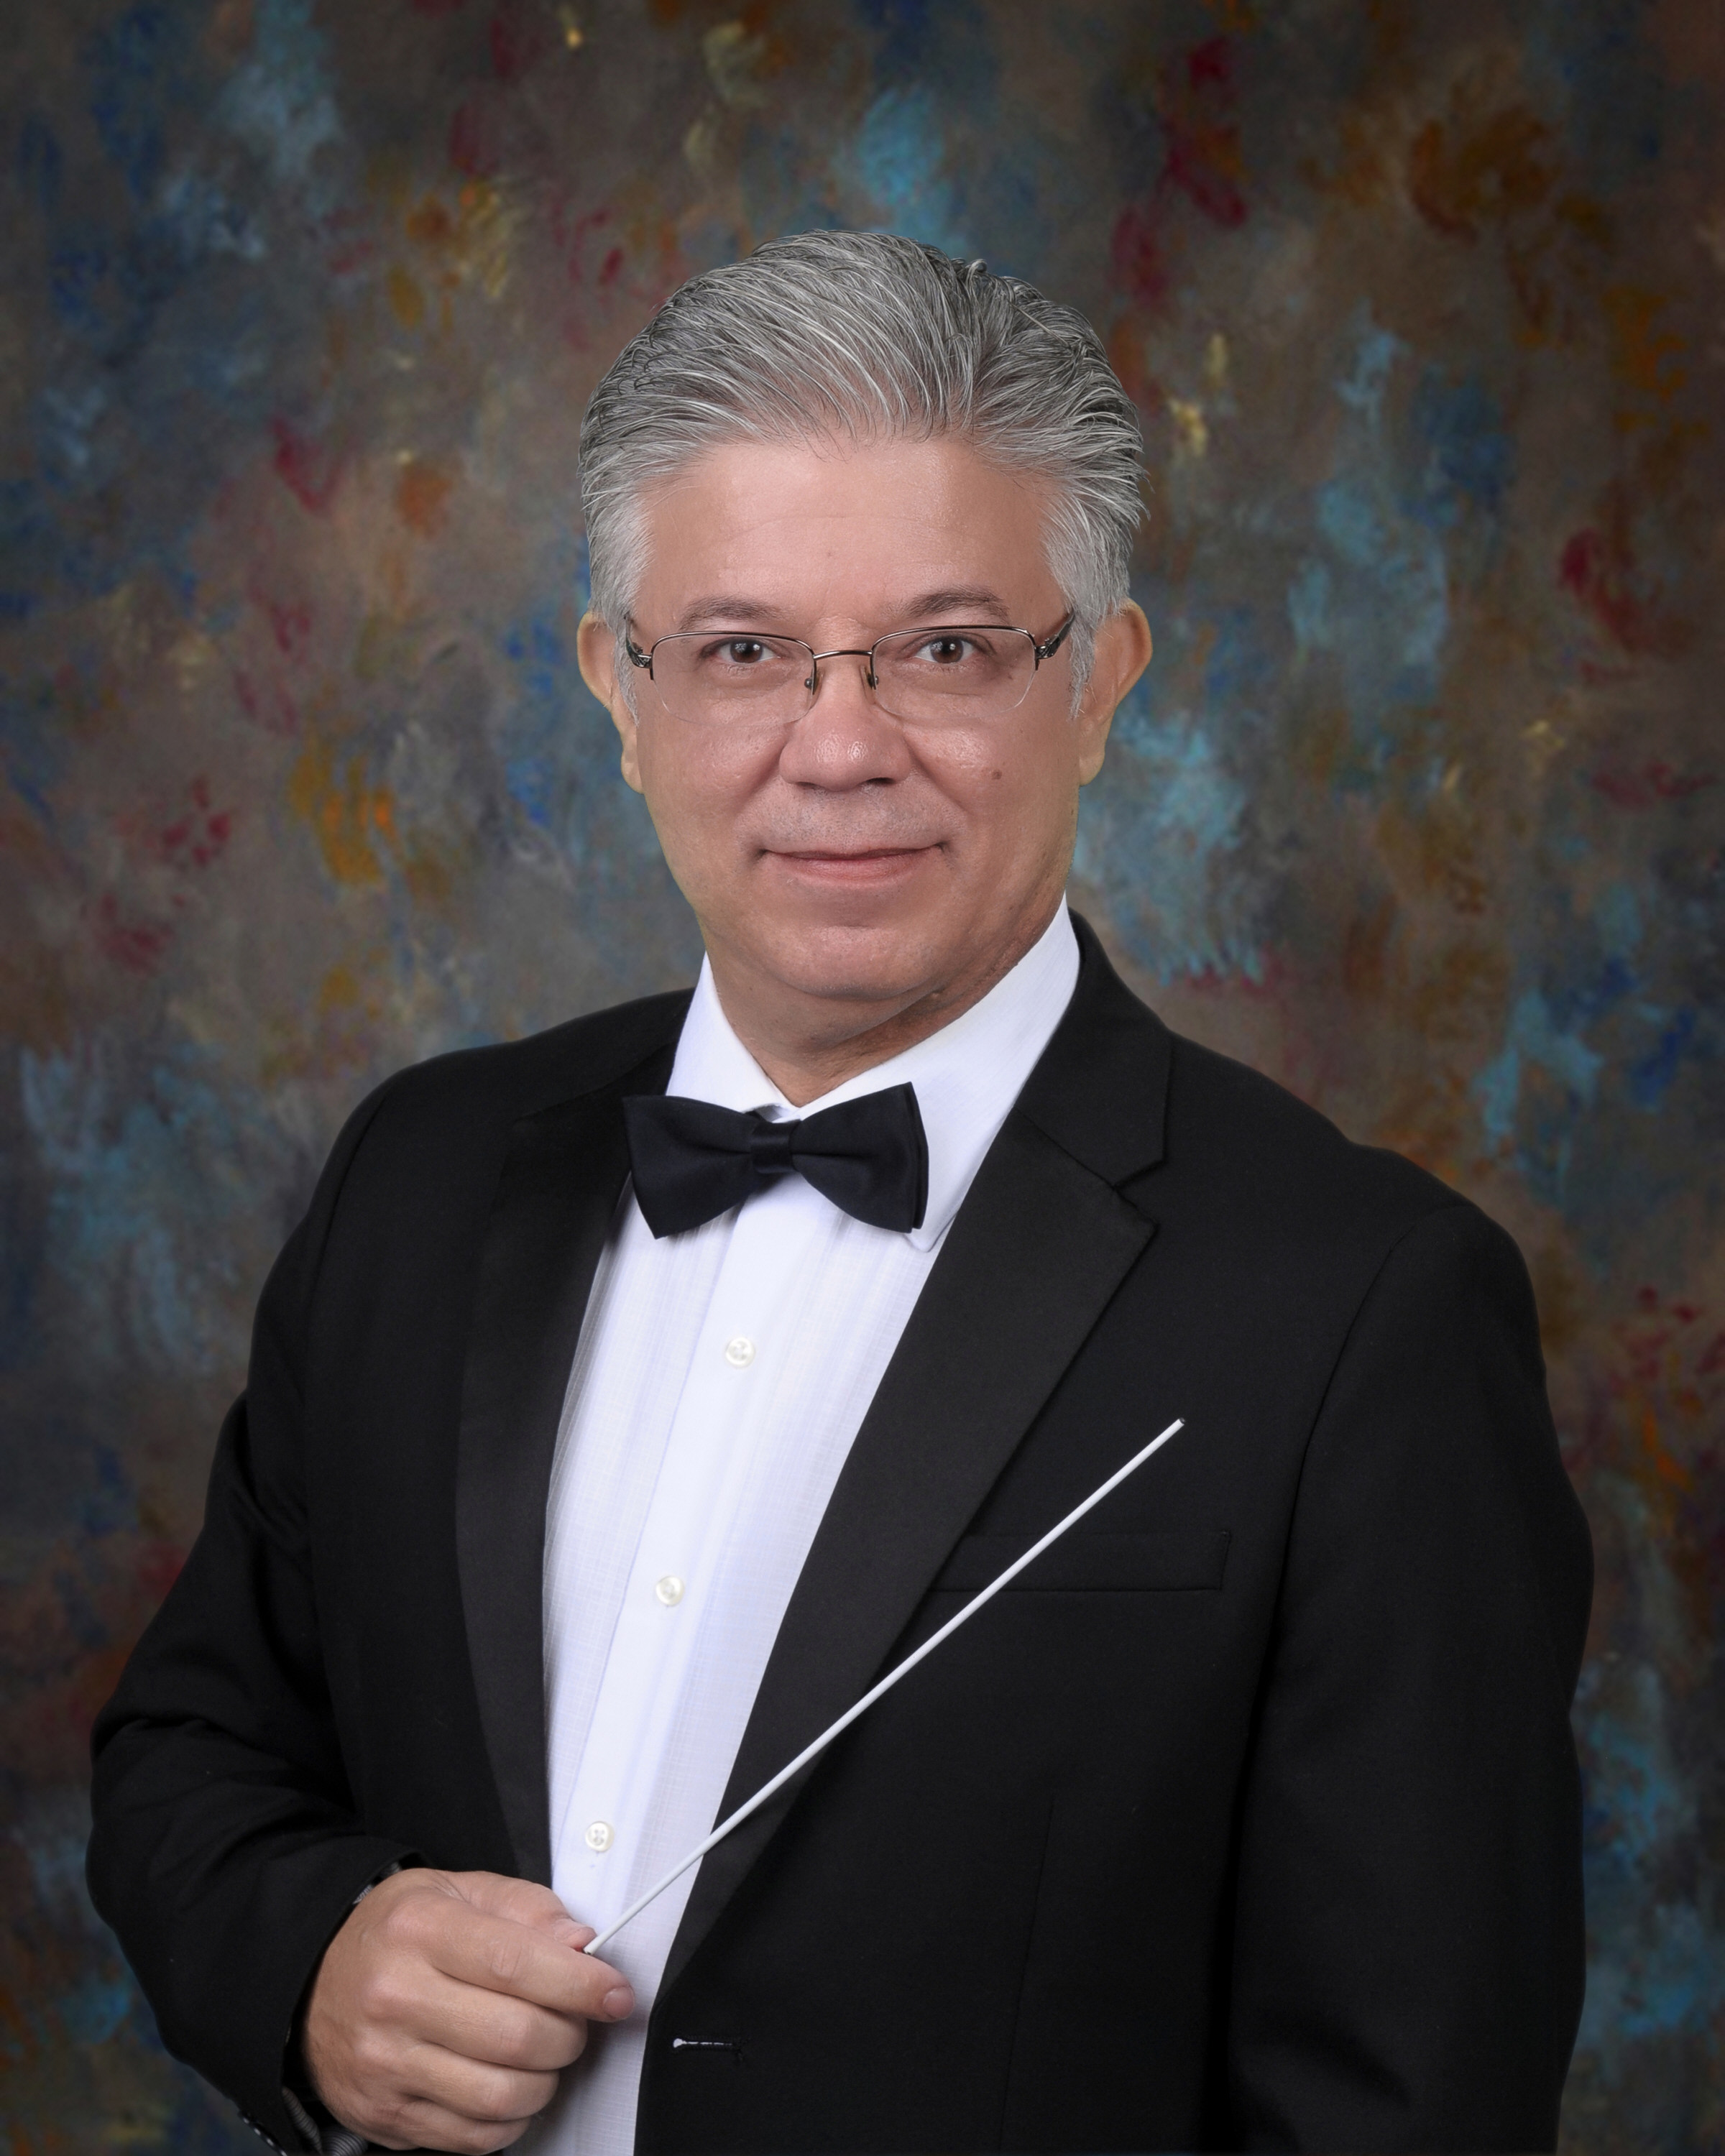 Image of the Brook Orchestra Director, Fernando Medina